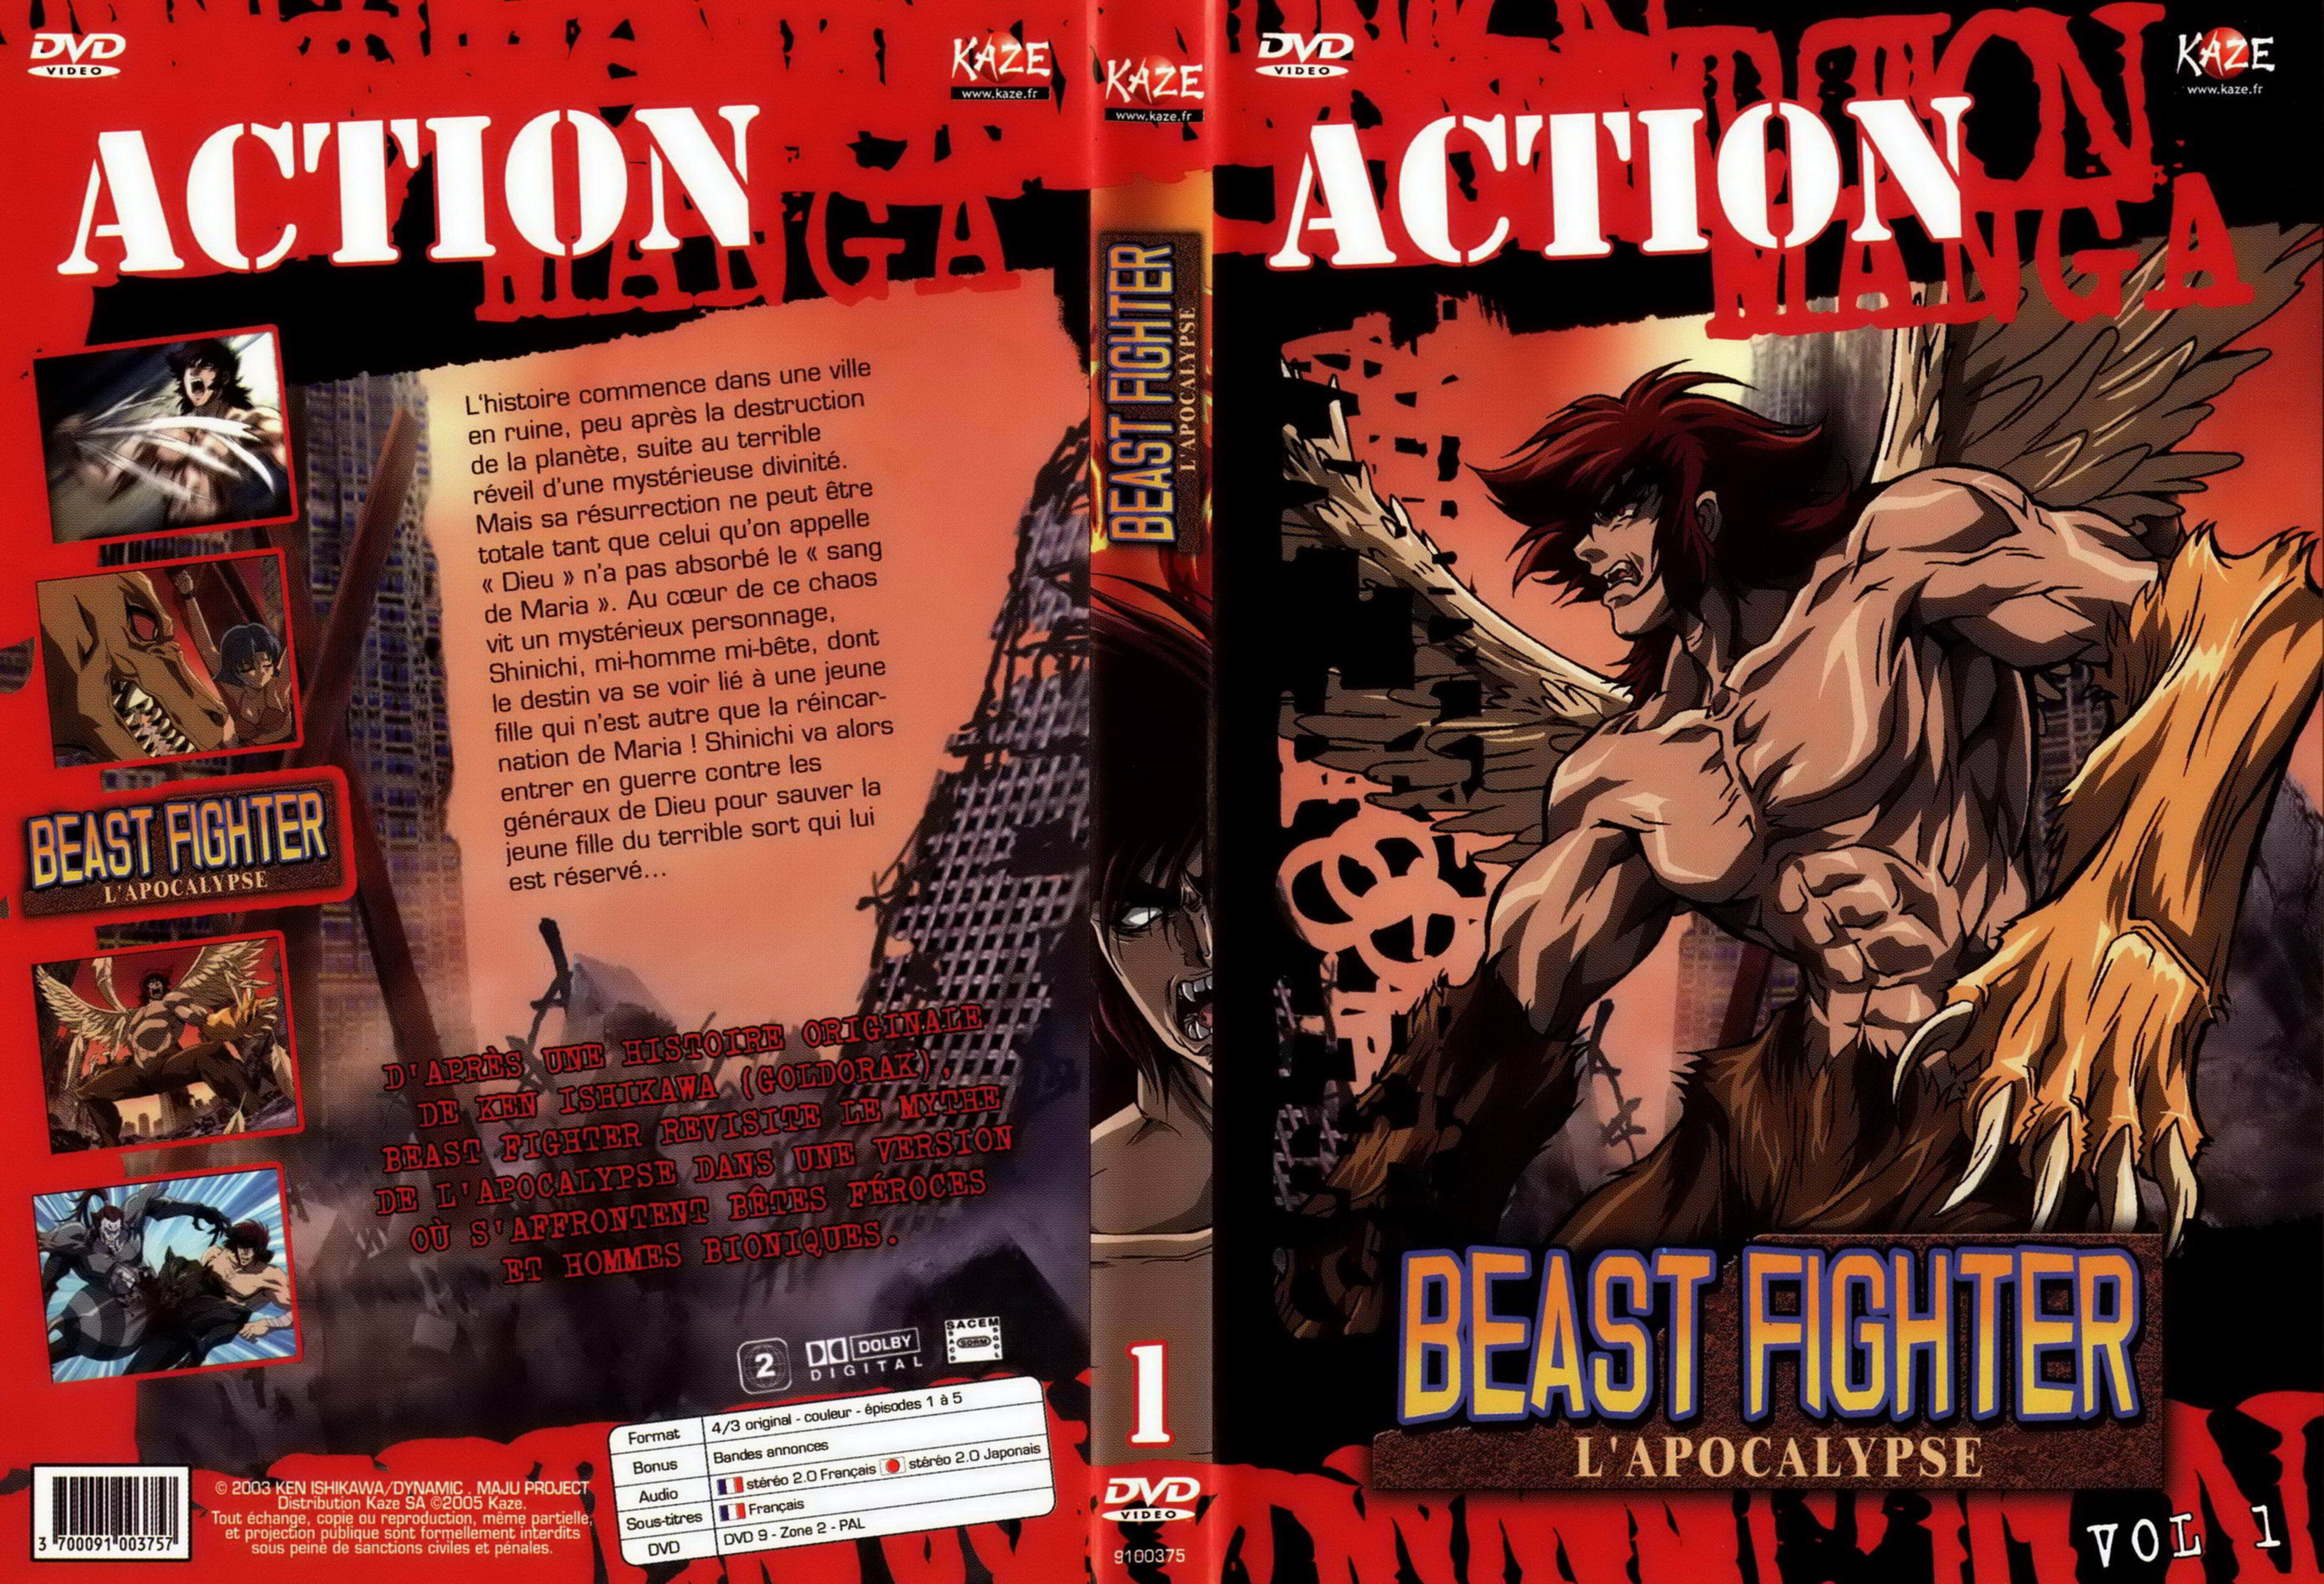 Jaquette DVD Beast fighter vol 1